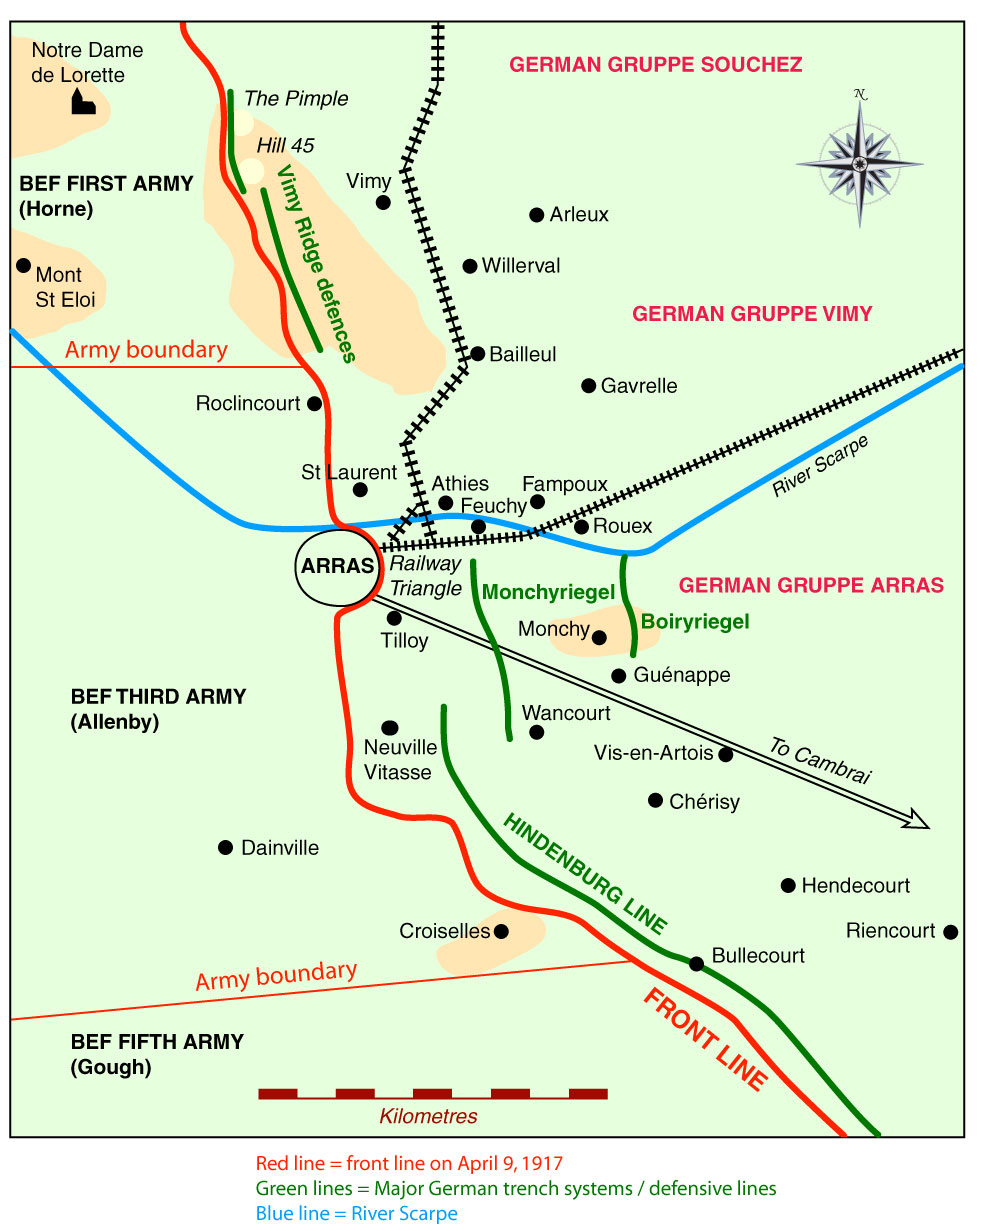 Battle of Arras